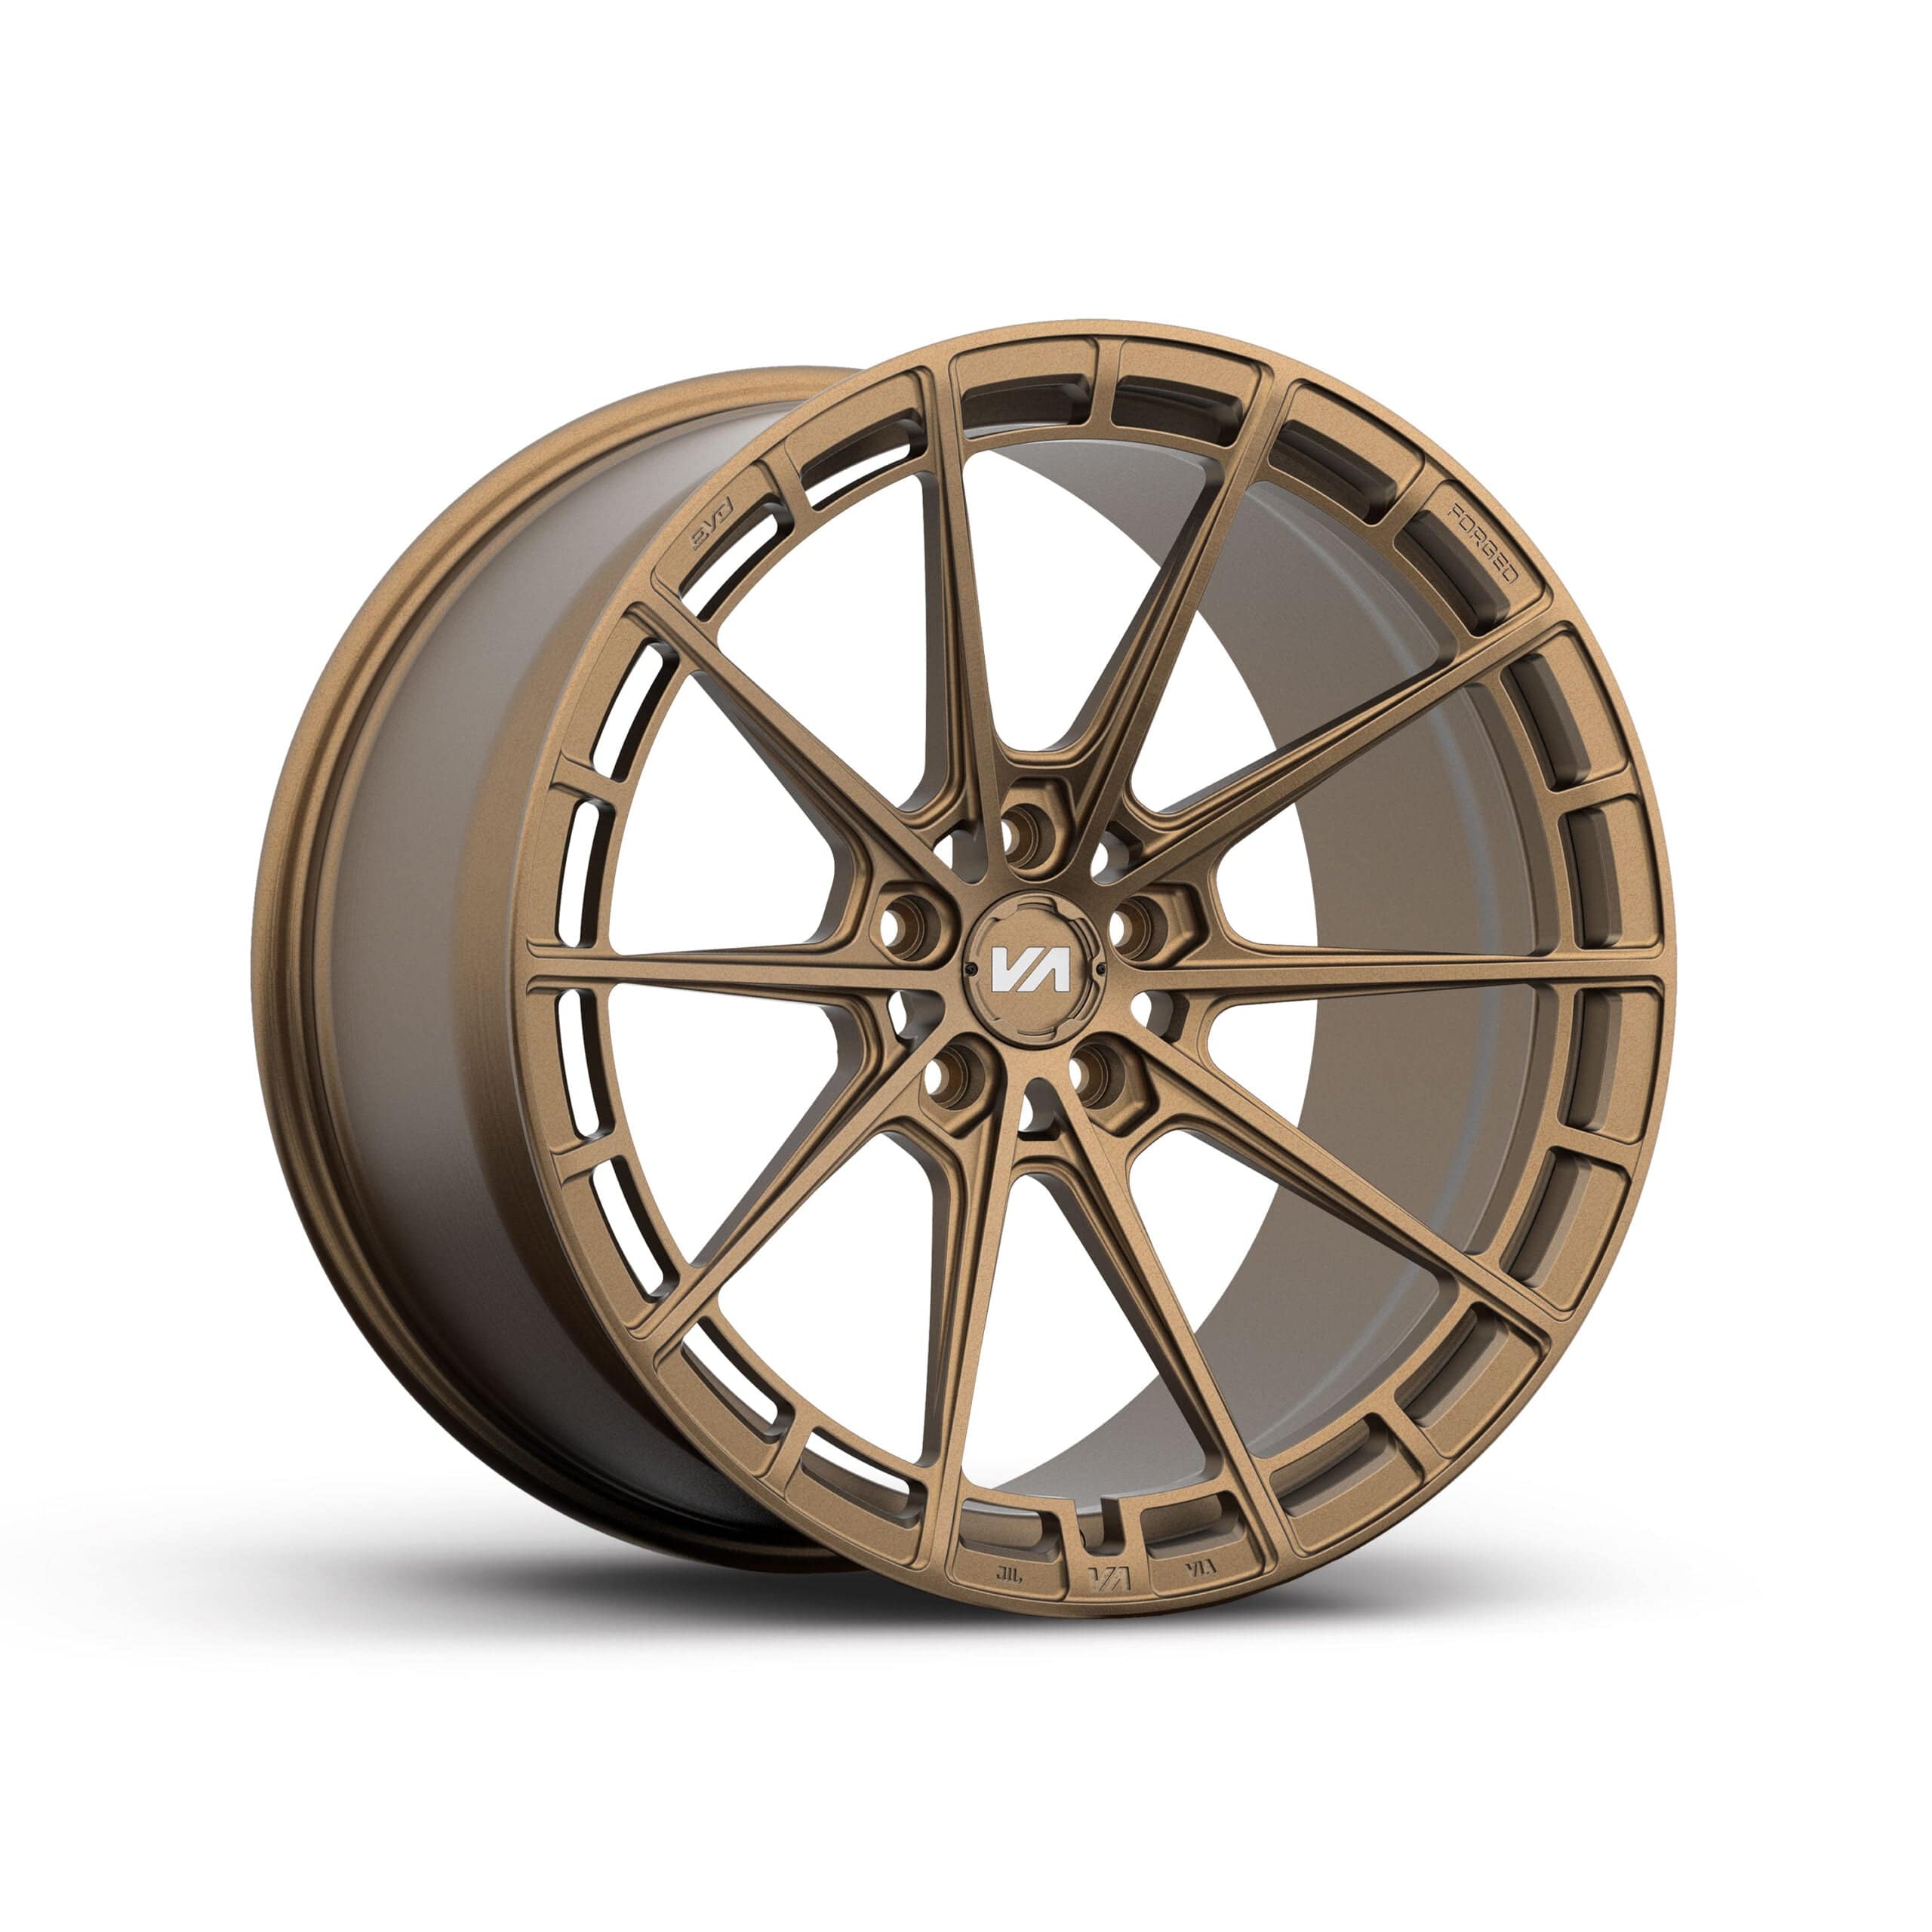 Kies-Motorsports Variant Variant™ Aure Collection Alloy Wheels 20x12